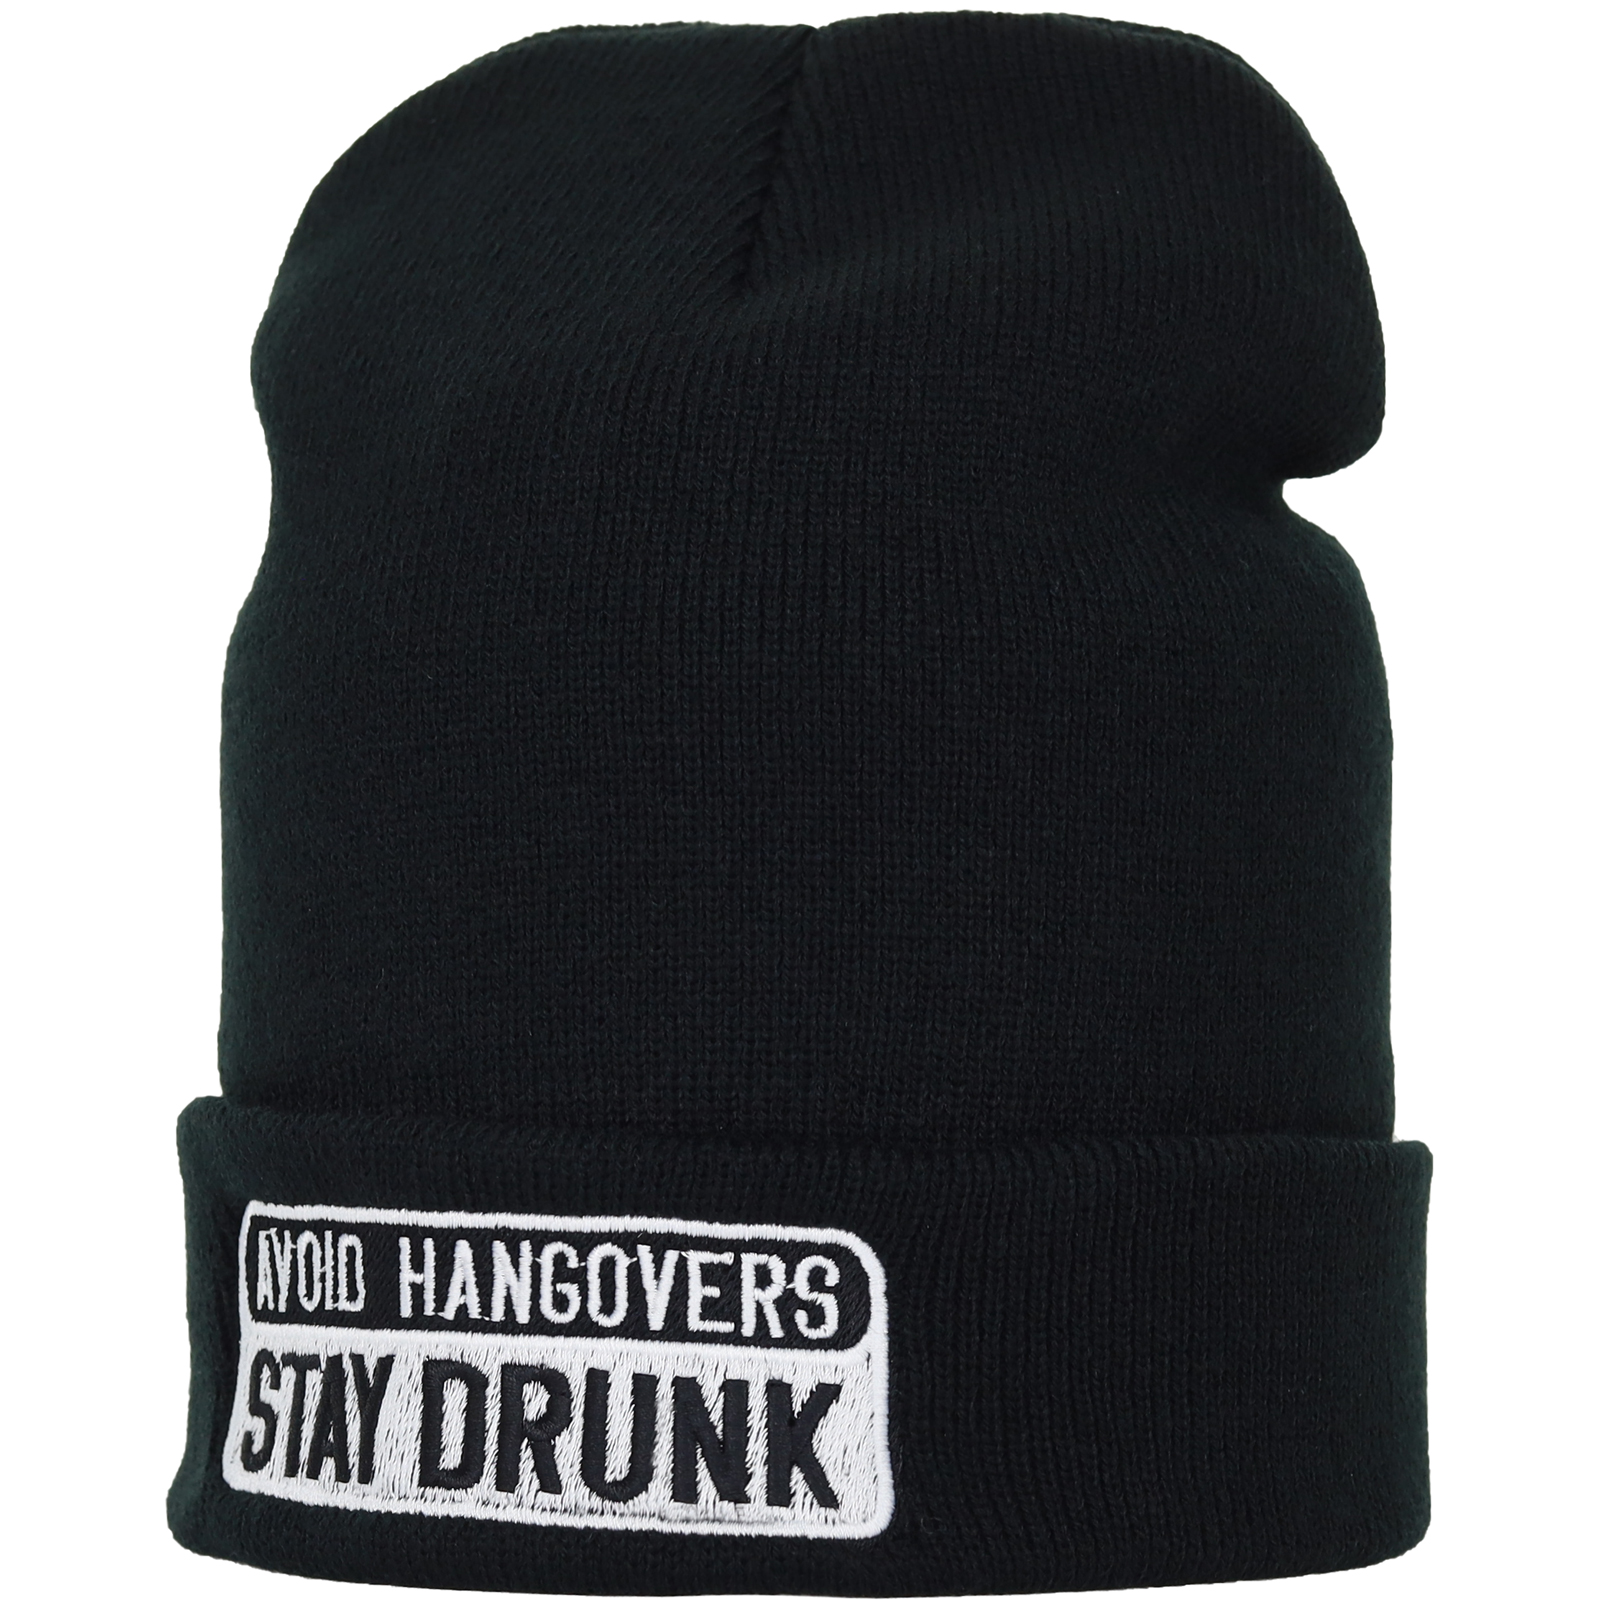 Avoid hangovers, stay drunk - Strickmütze